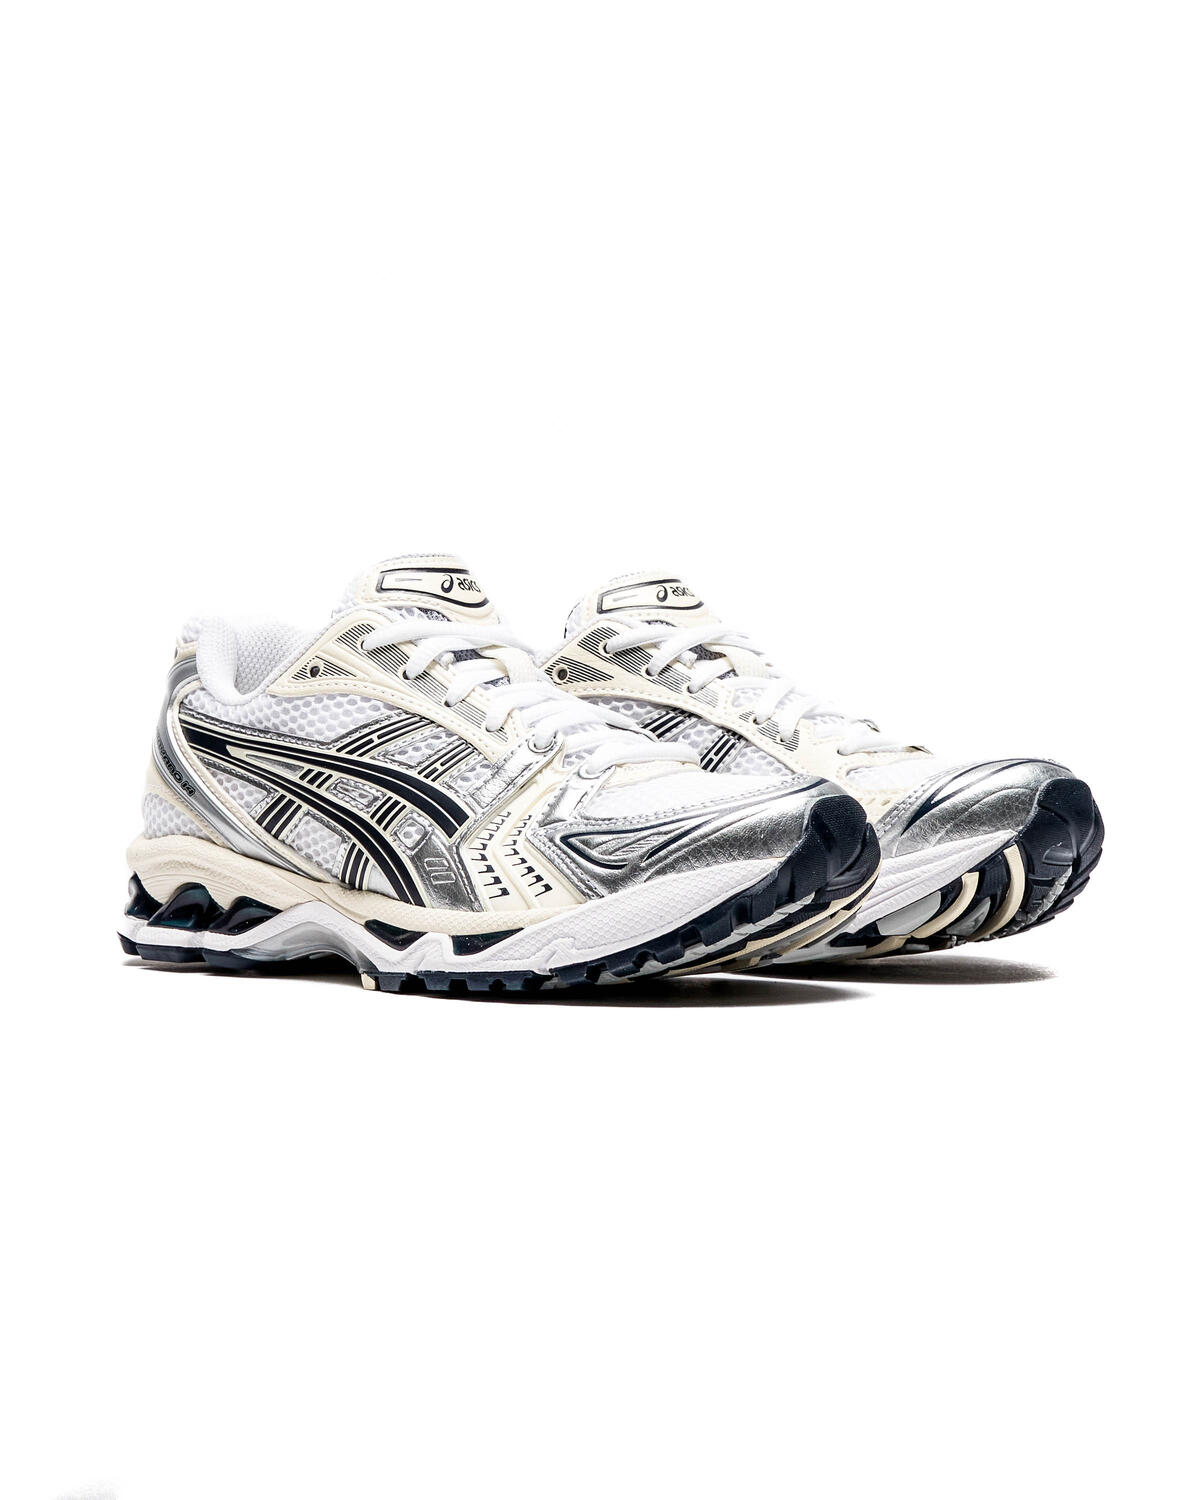 Asics GT-2000 10 Marathon Running Shoes Sneakers 1011B412-020